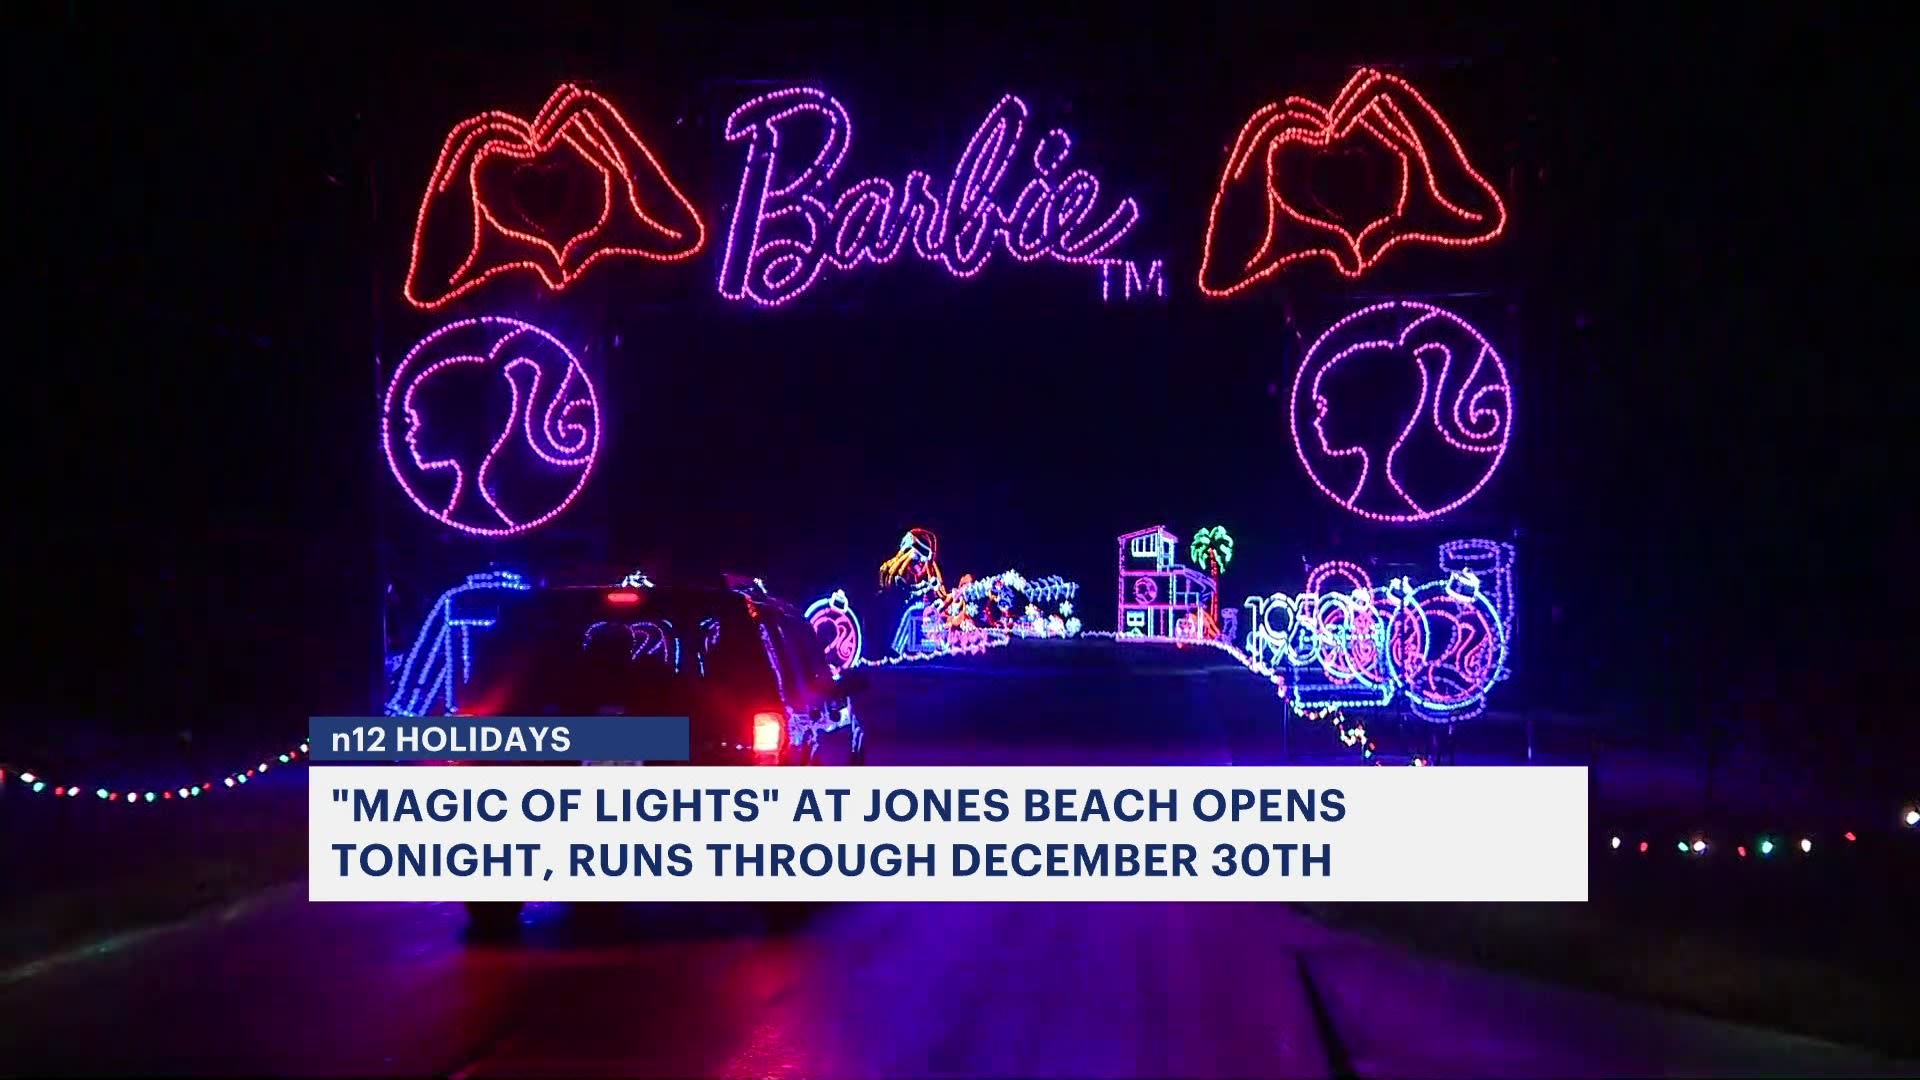 Magic of Lights opens at Jones Beach